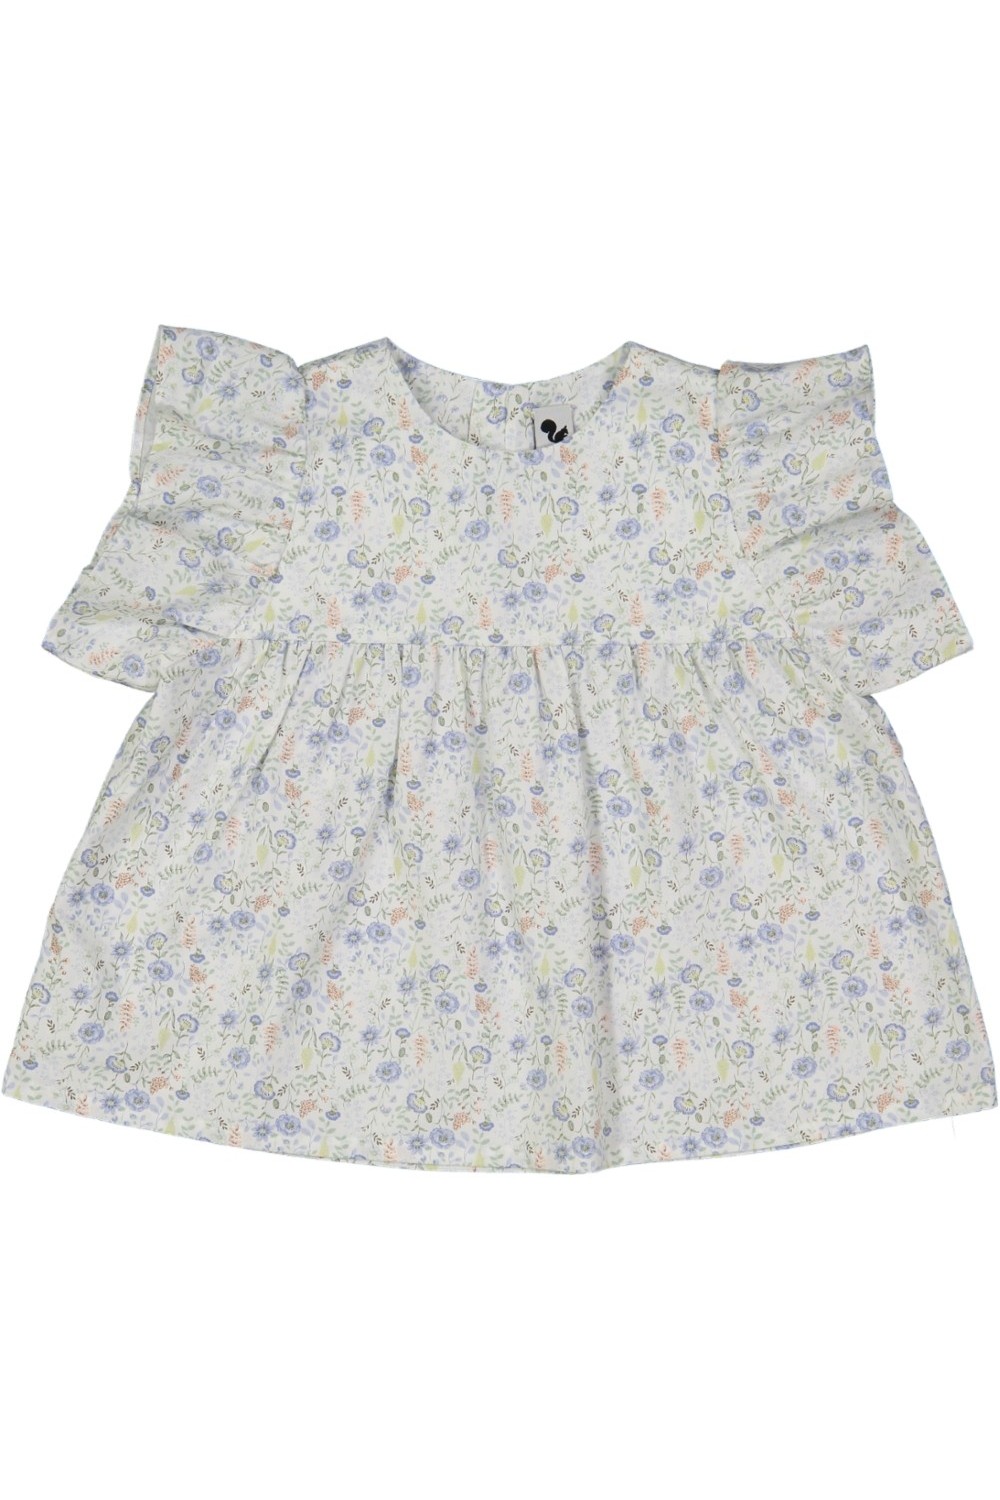 blouse girl summer flowers organic cotton